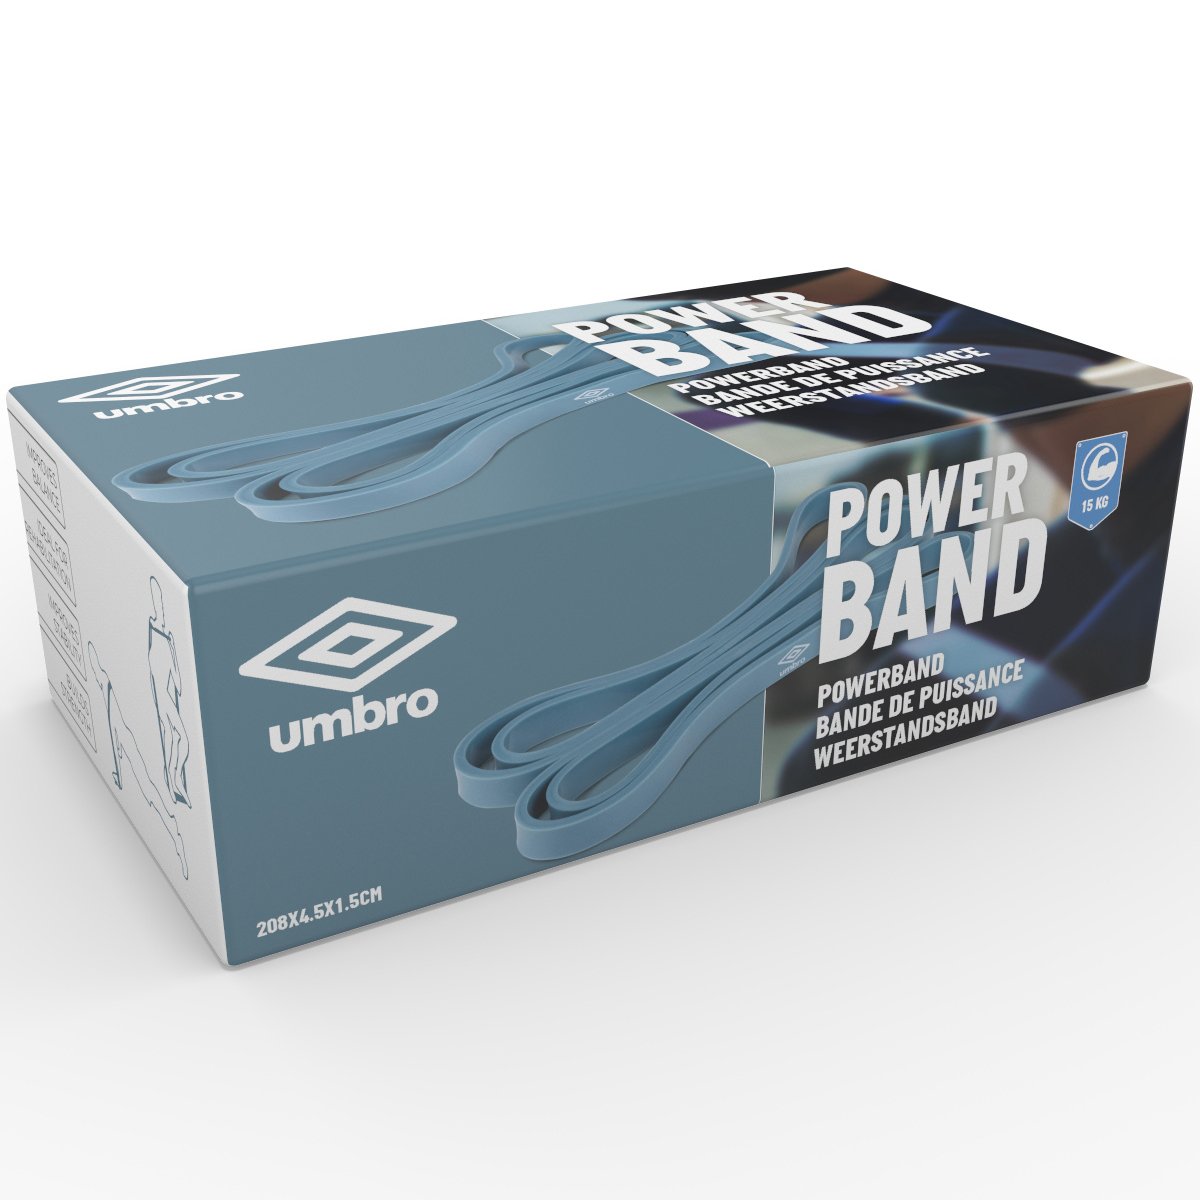 Umbro Power band 15 kg